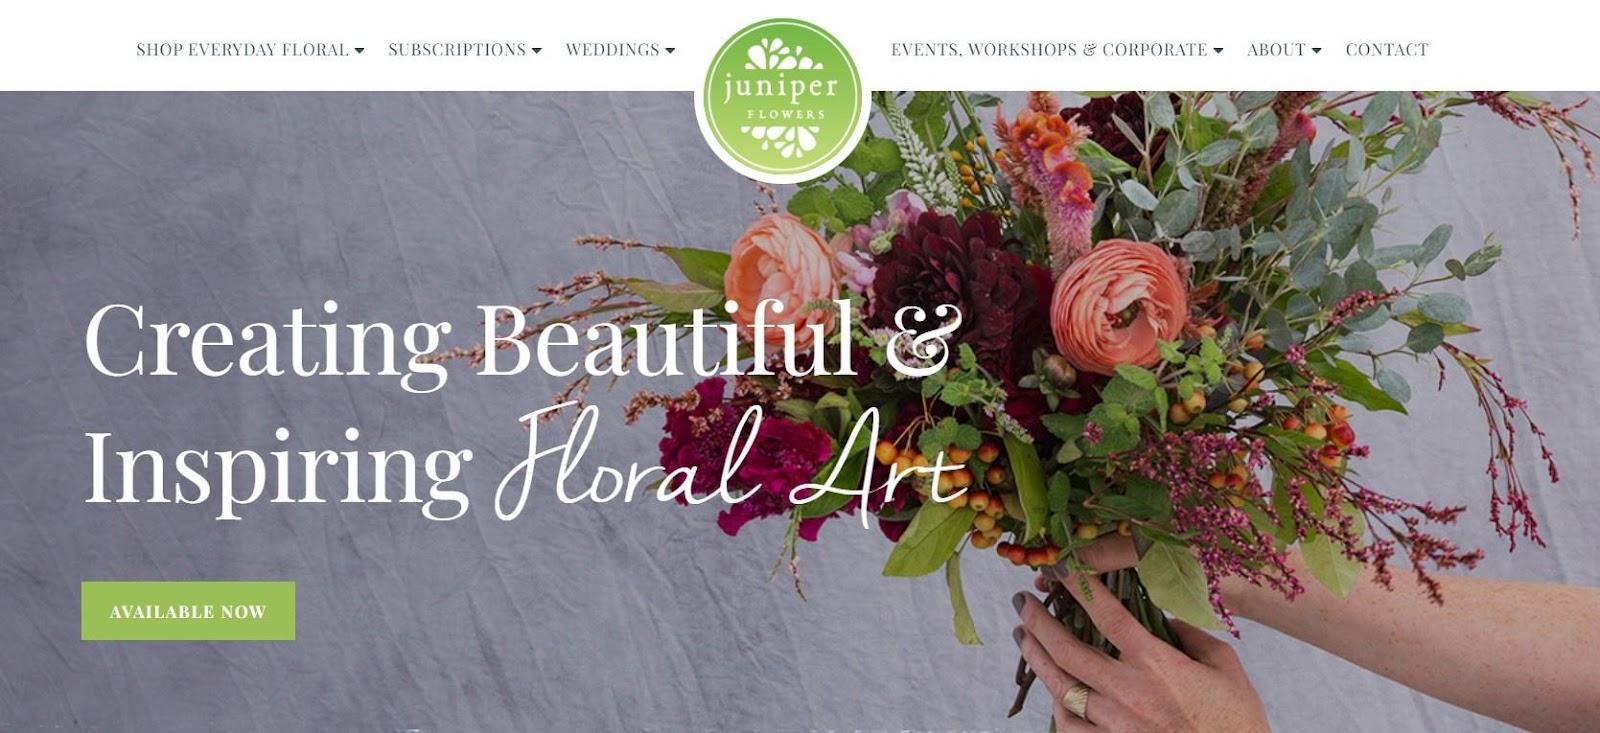 Best florist websites — design example from Juniper Flowers.